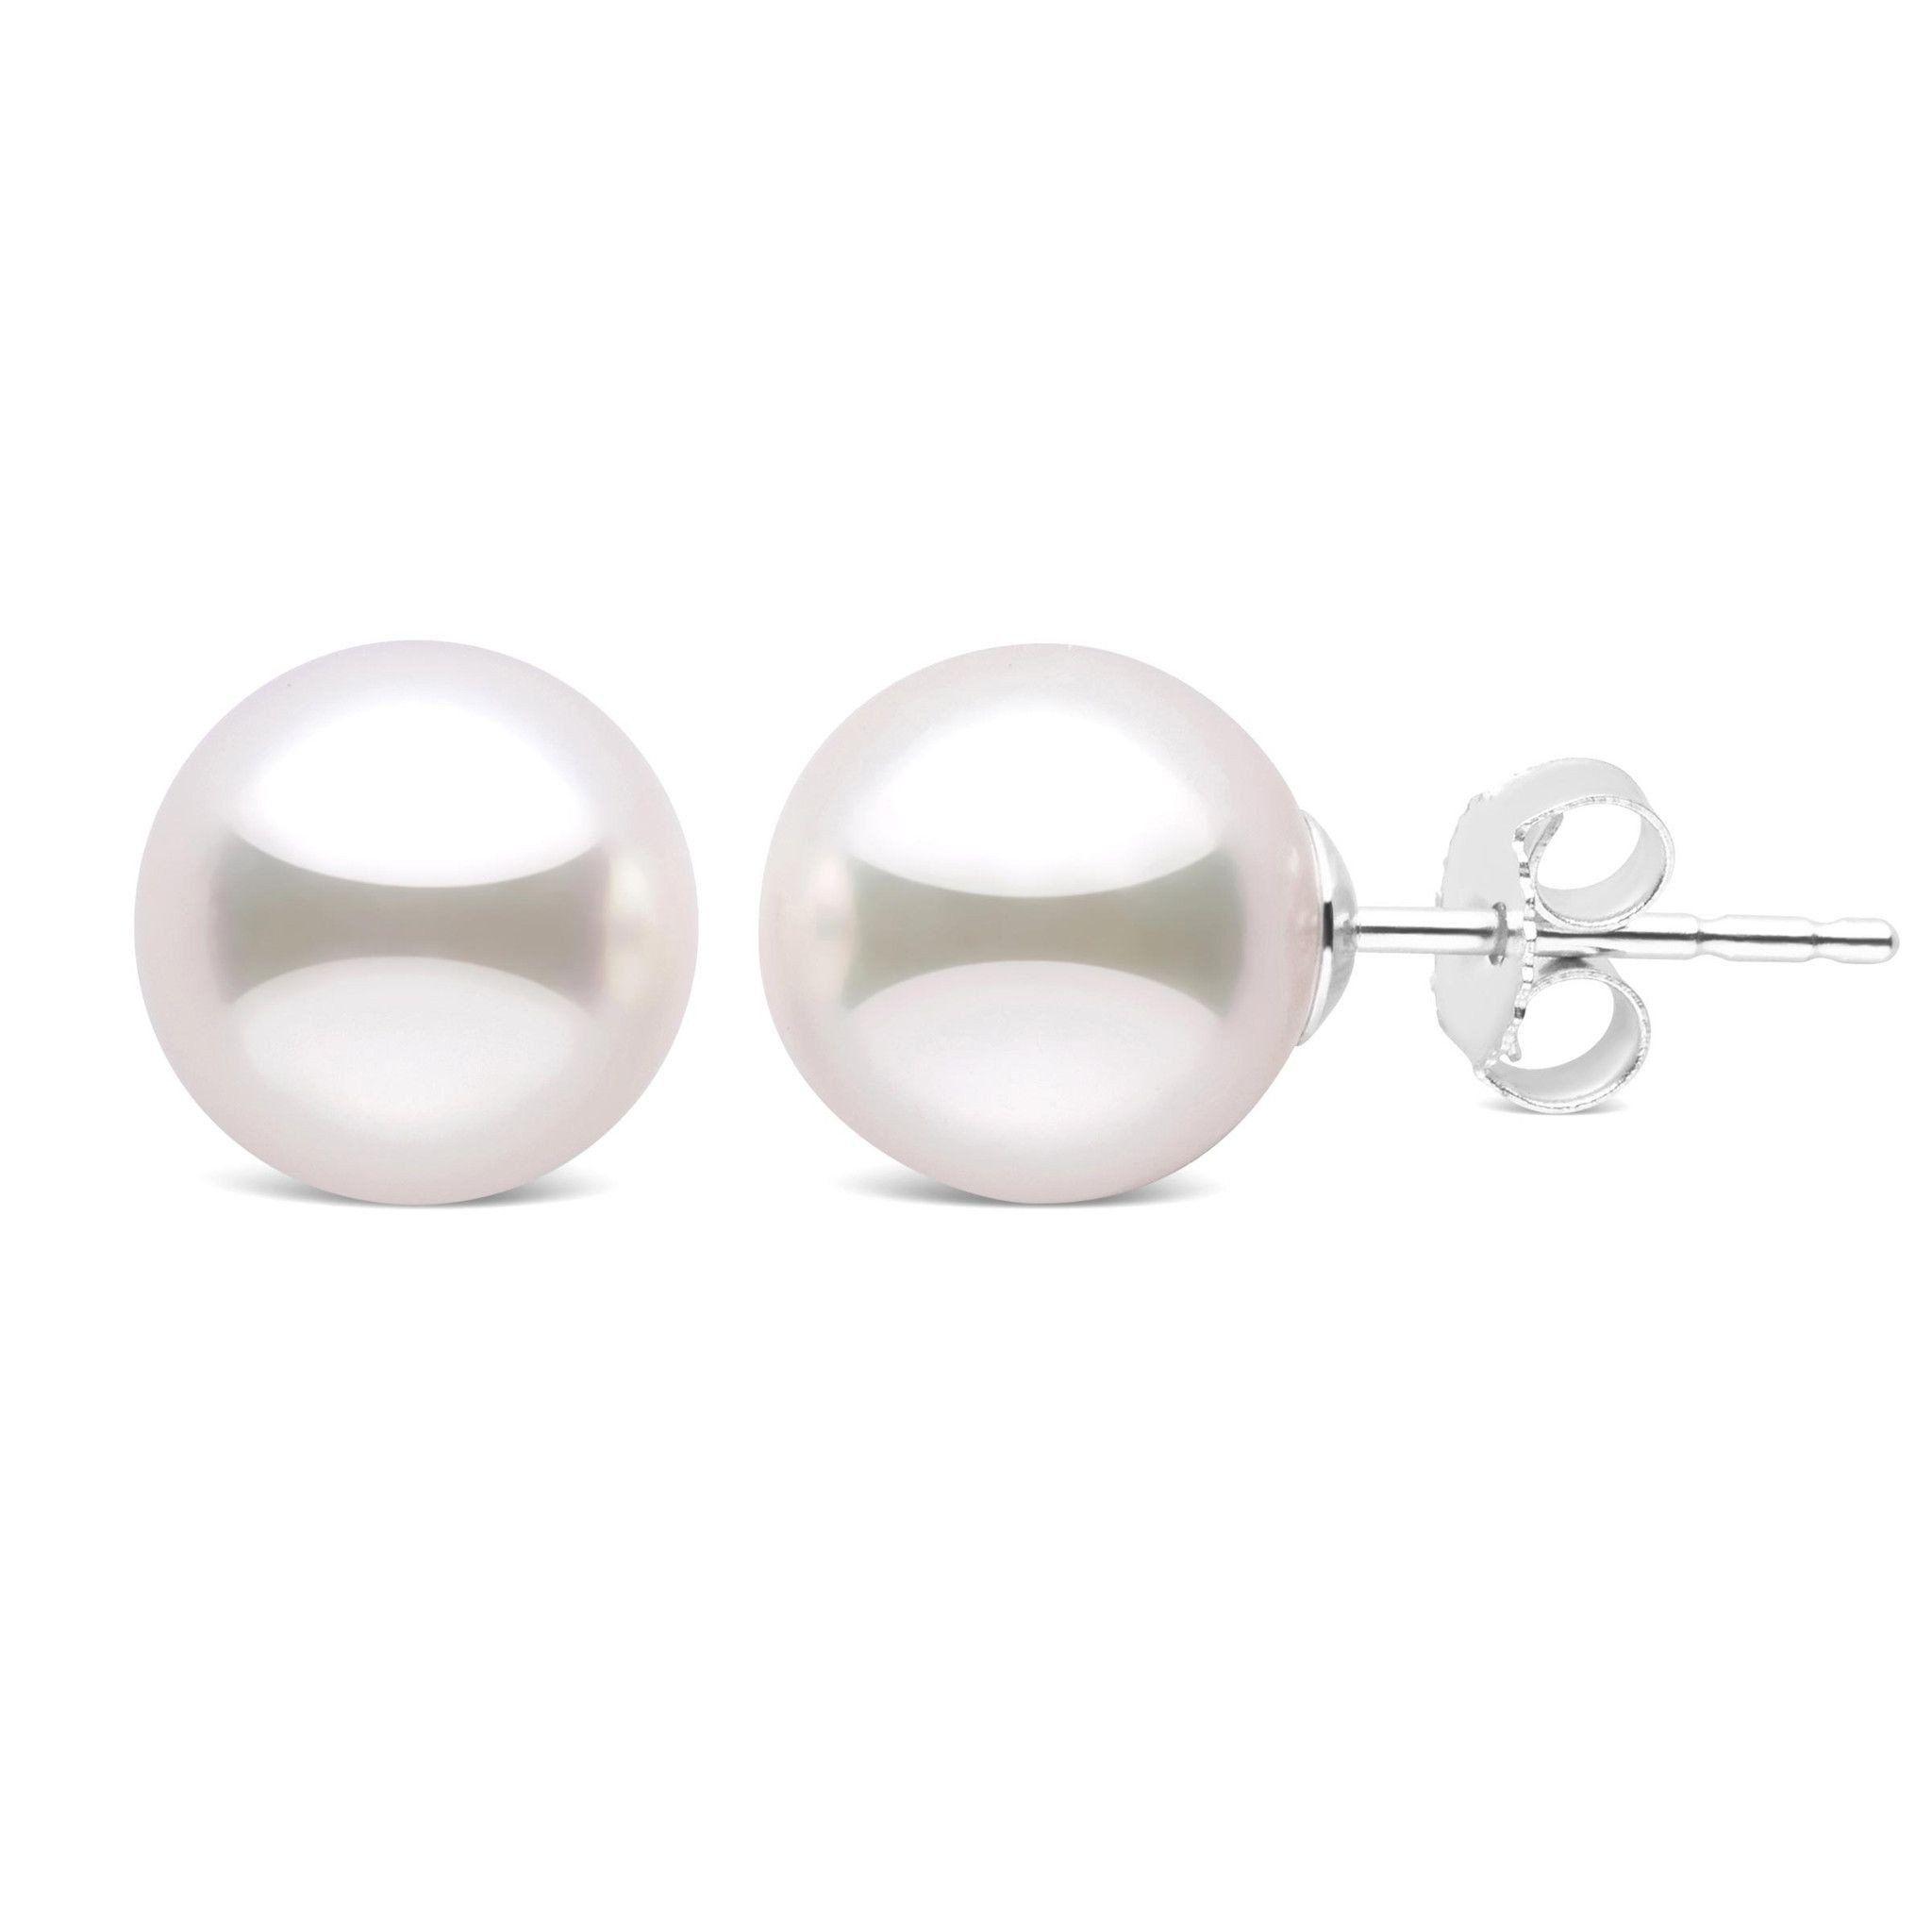 8.5-9.0 mm AAA White Freshwater Pearl Stud Earrings